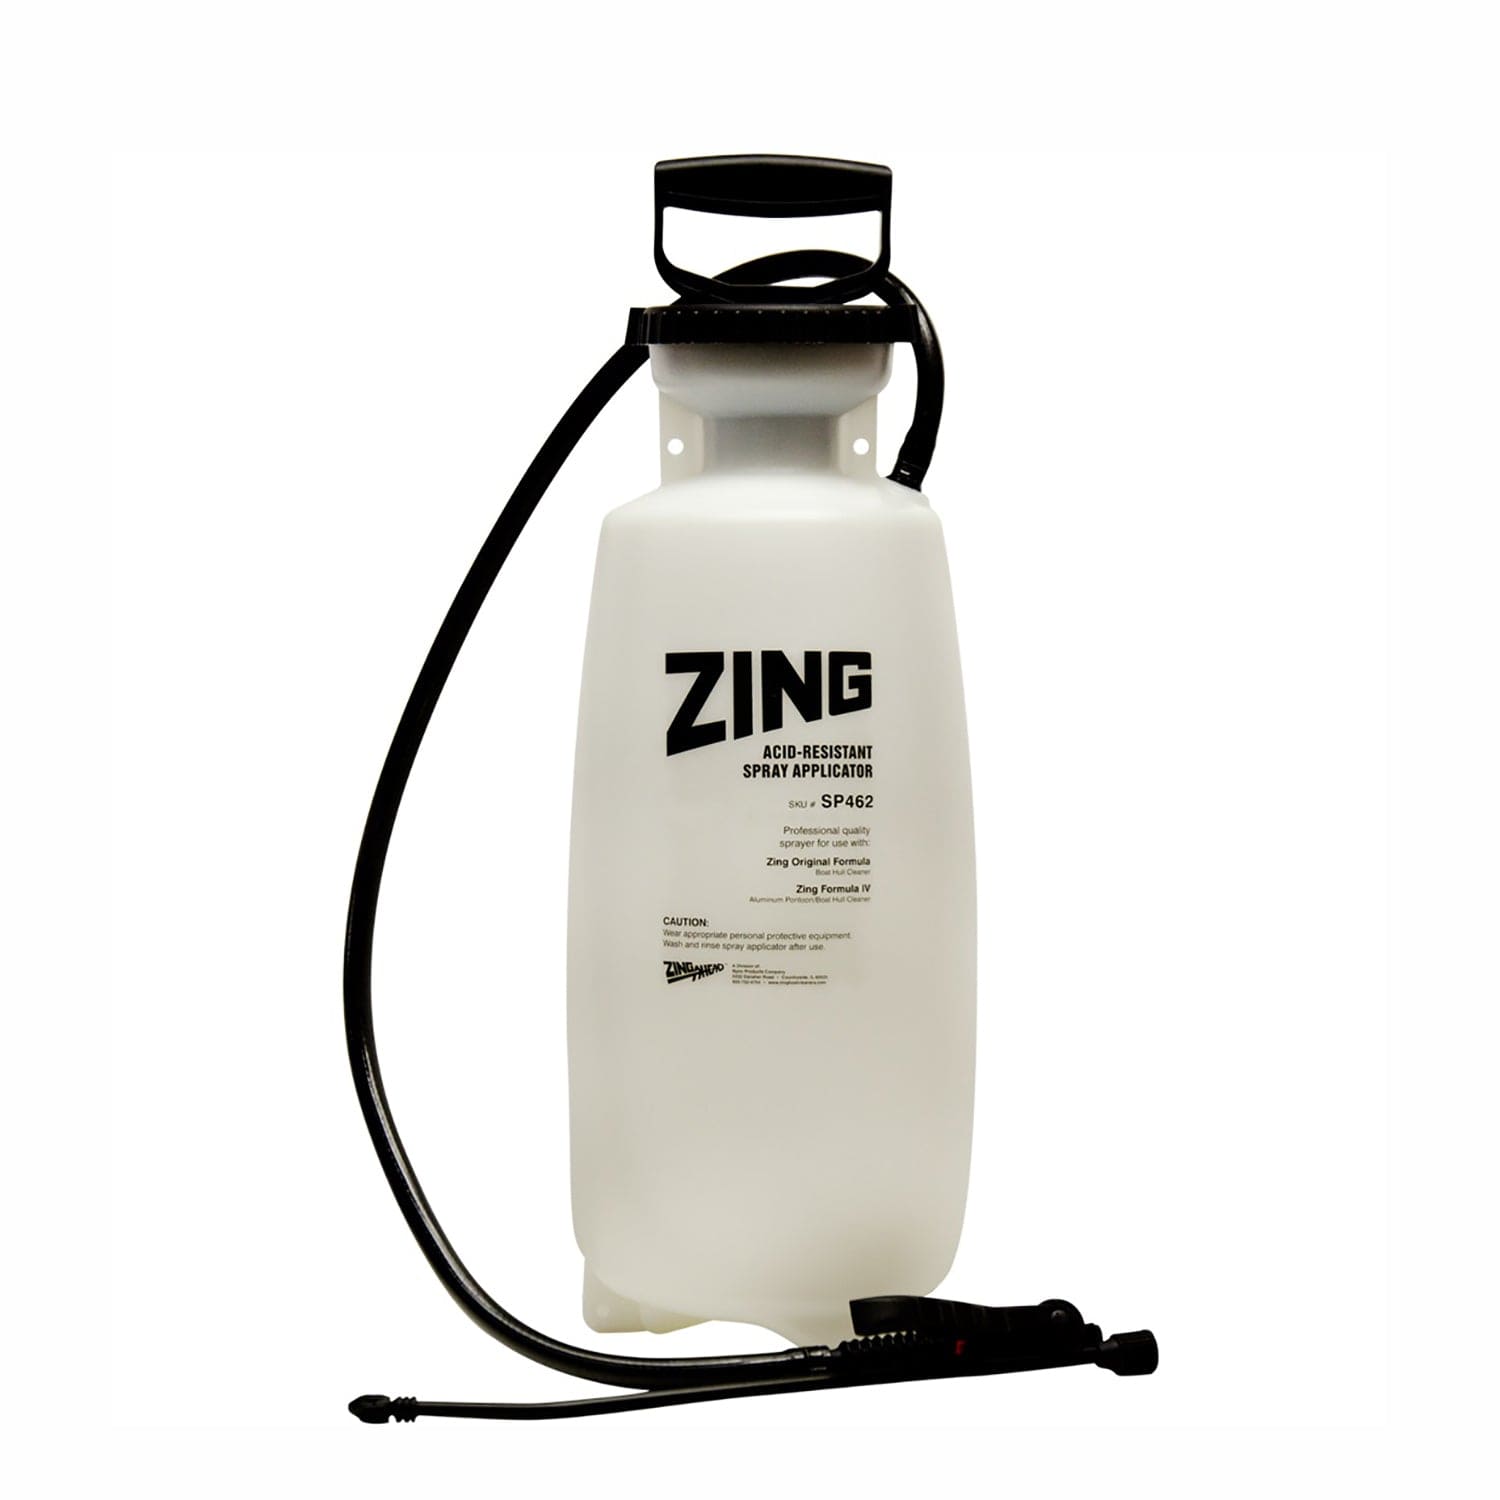 Zing SP462 Acid Resistant Spray Applicator - 2 Gallon